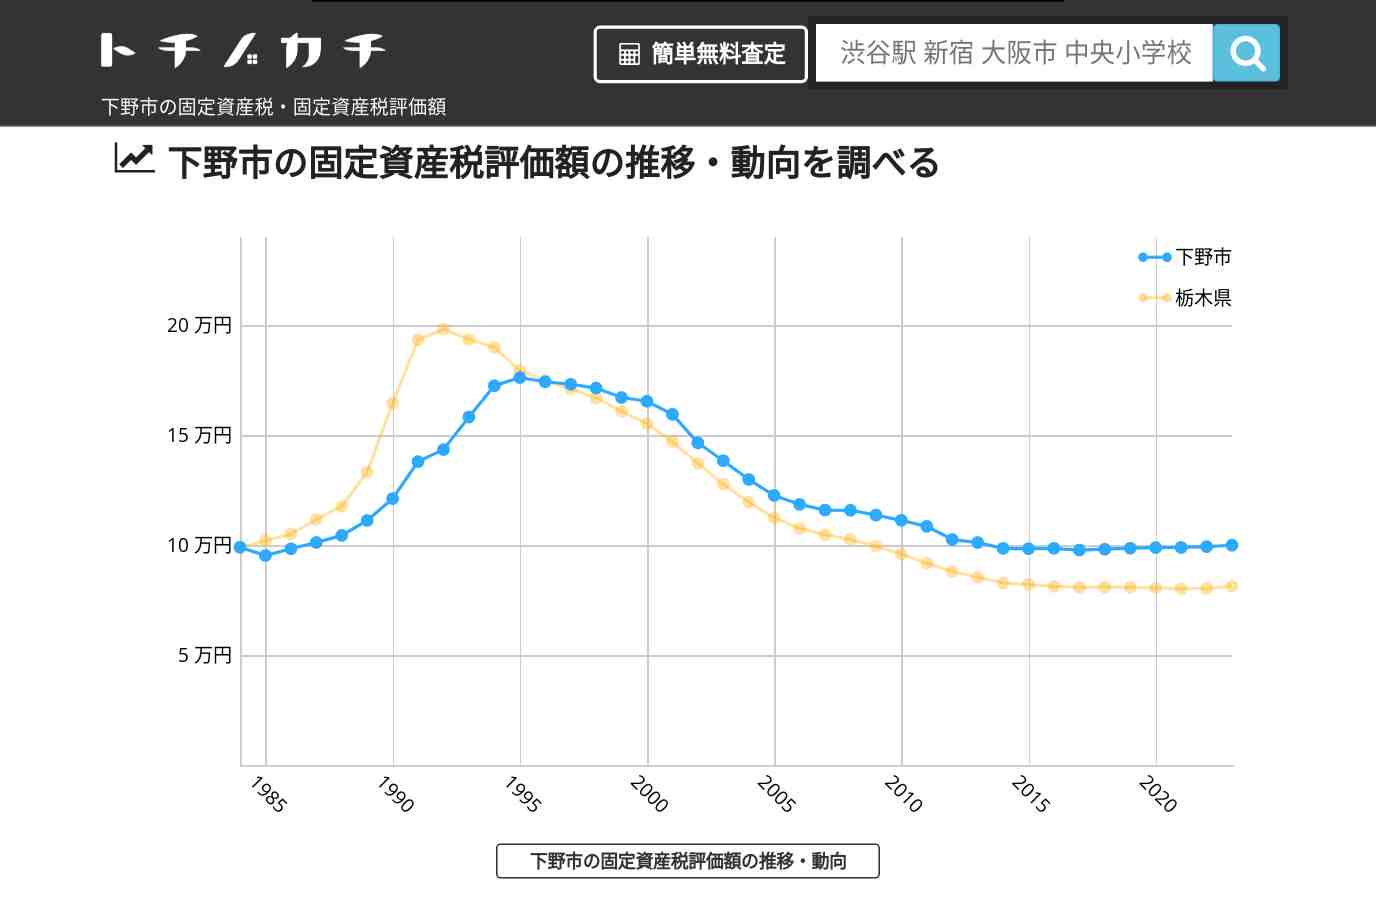 石橋中学校(栃木県 下野市)周辺の固定資産税・固定資産税評価額 | トチノカチ